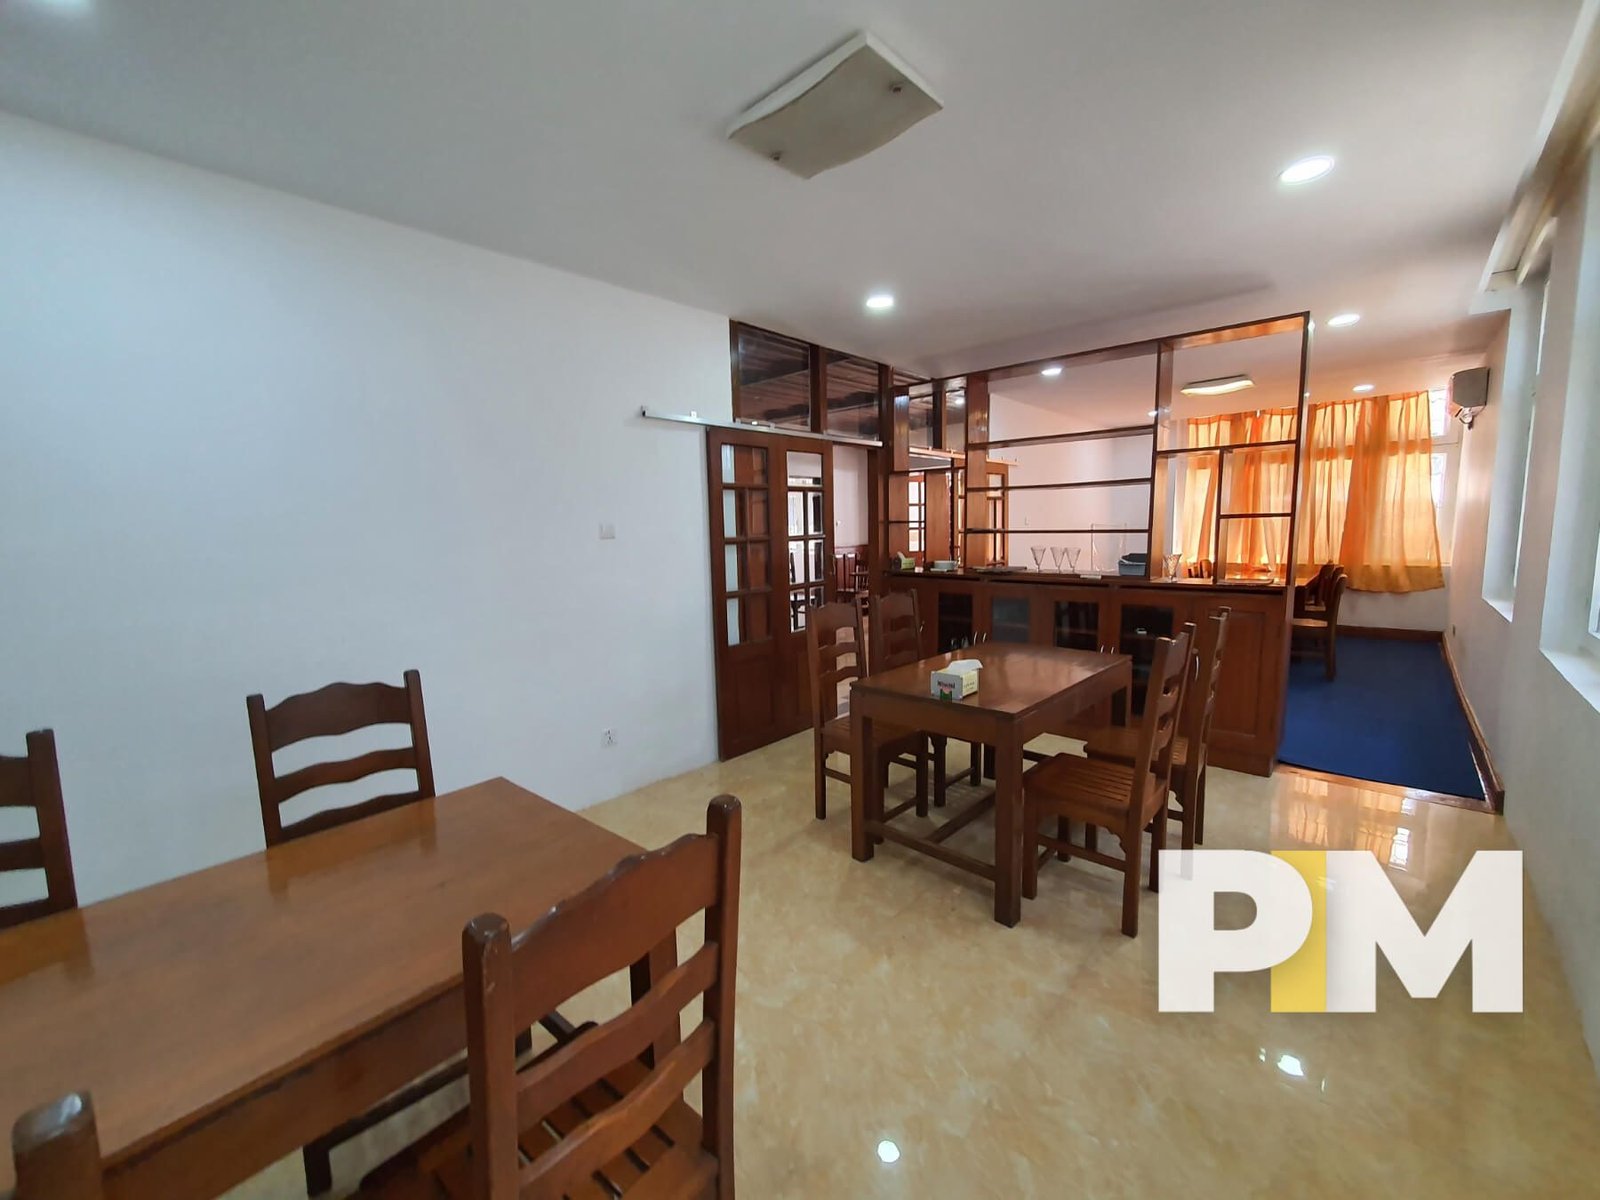 Dining room - Yangon Real Estate